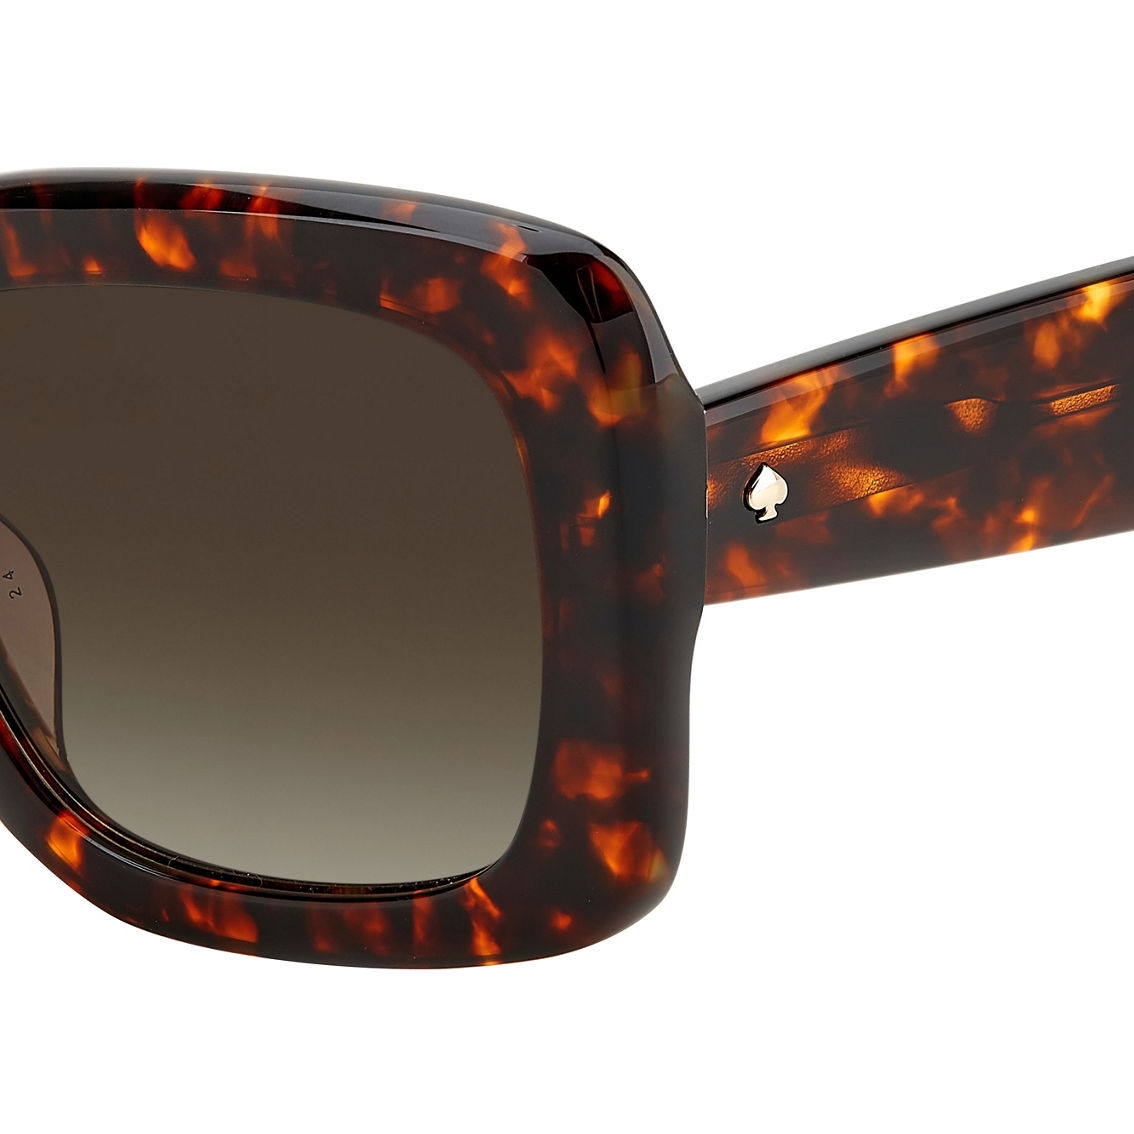 Kate Spade Bellamys 086HA Full Rimmed Square RX ABLE Gradient Lens Sunglasses - Image 3 of 3